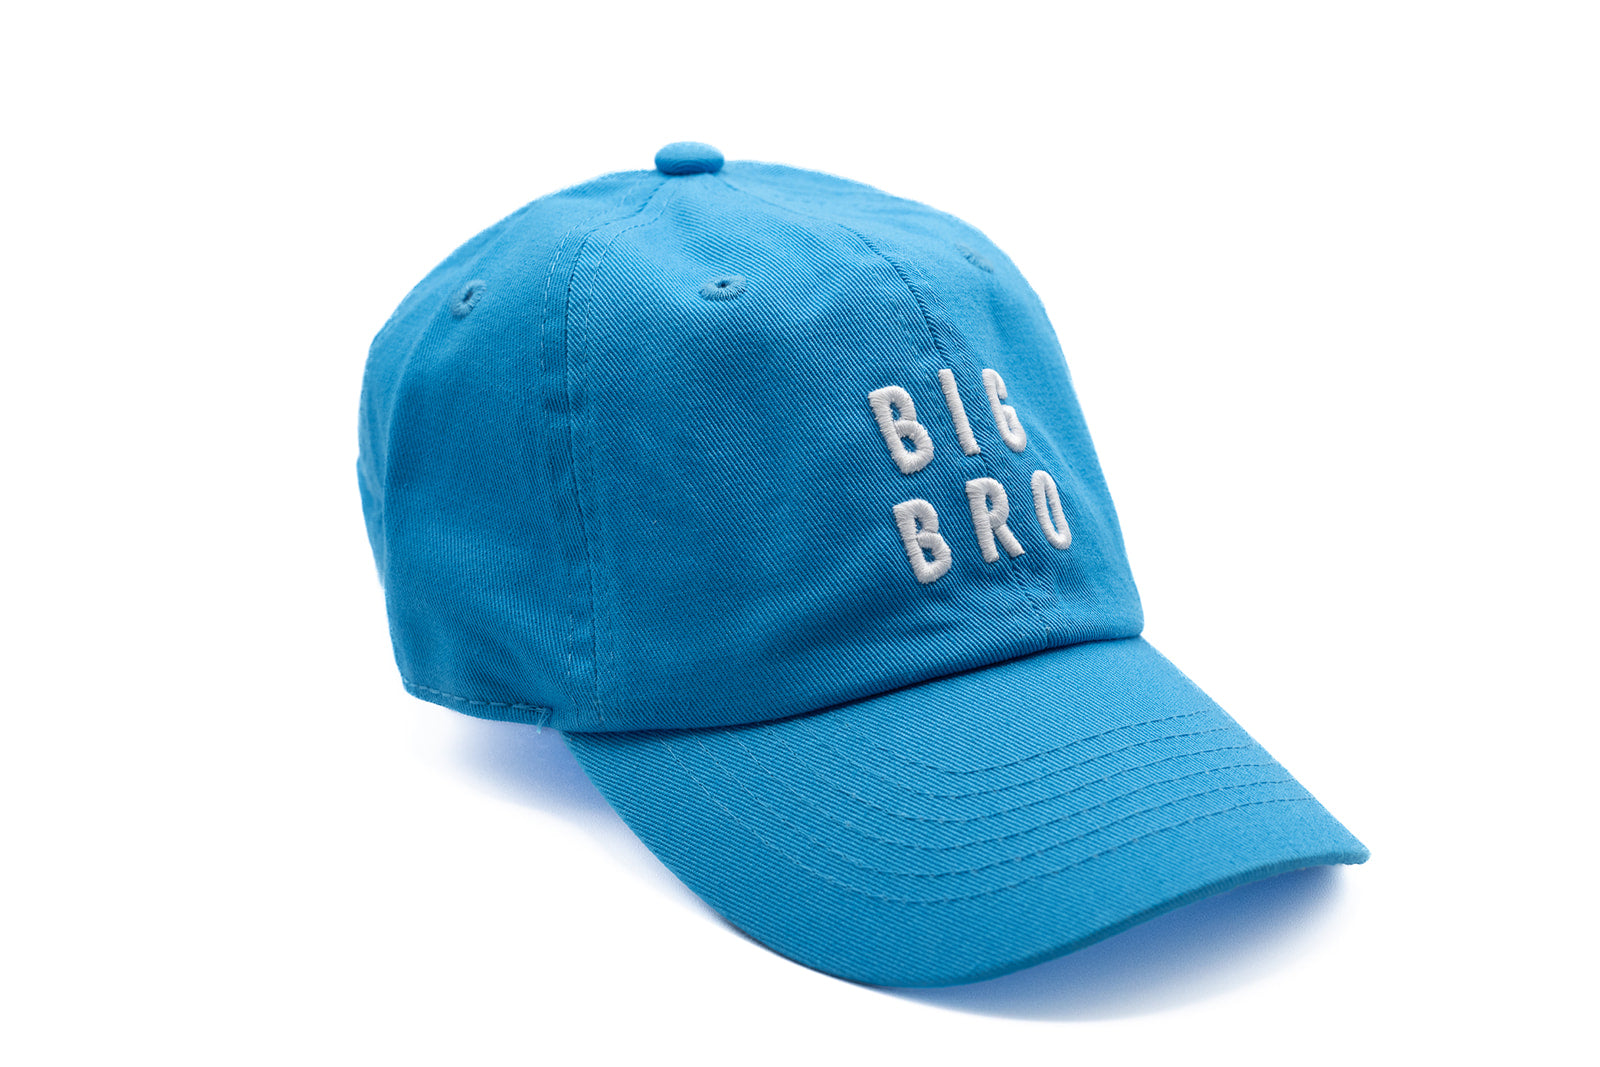 Capri Big Bro Hat